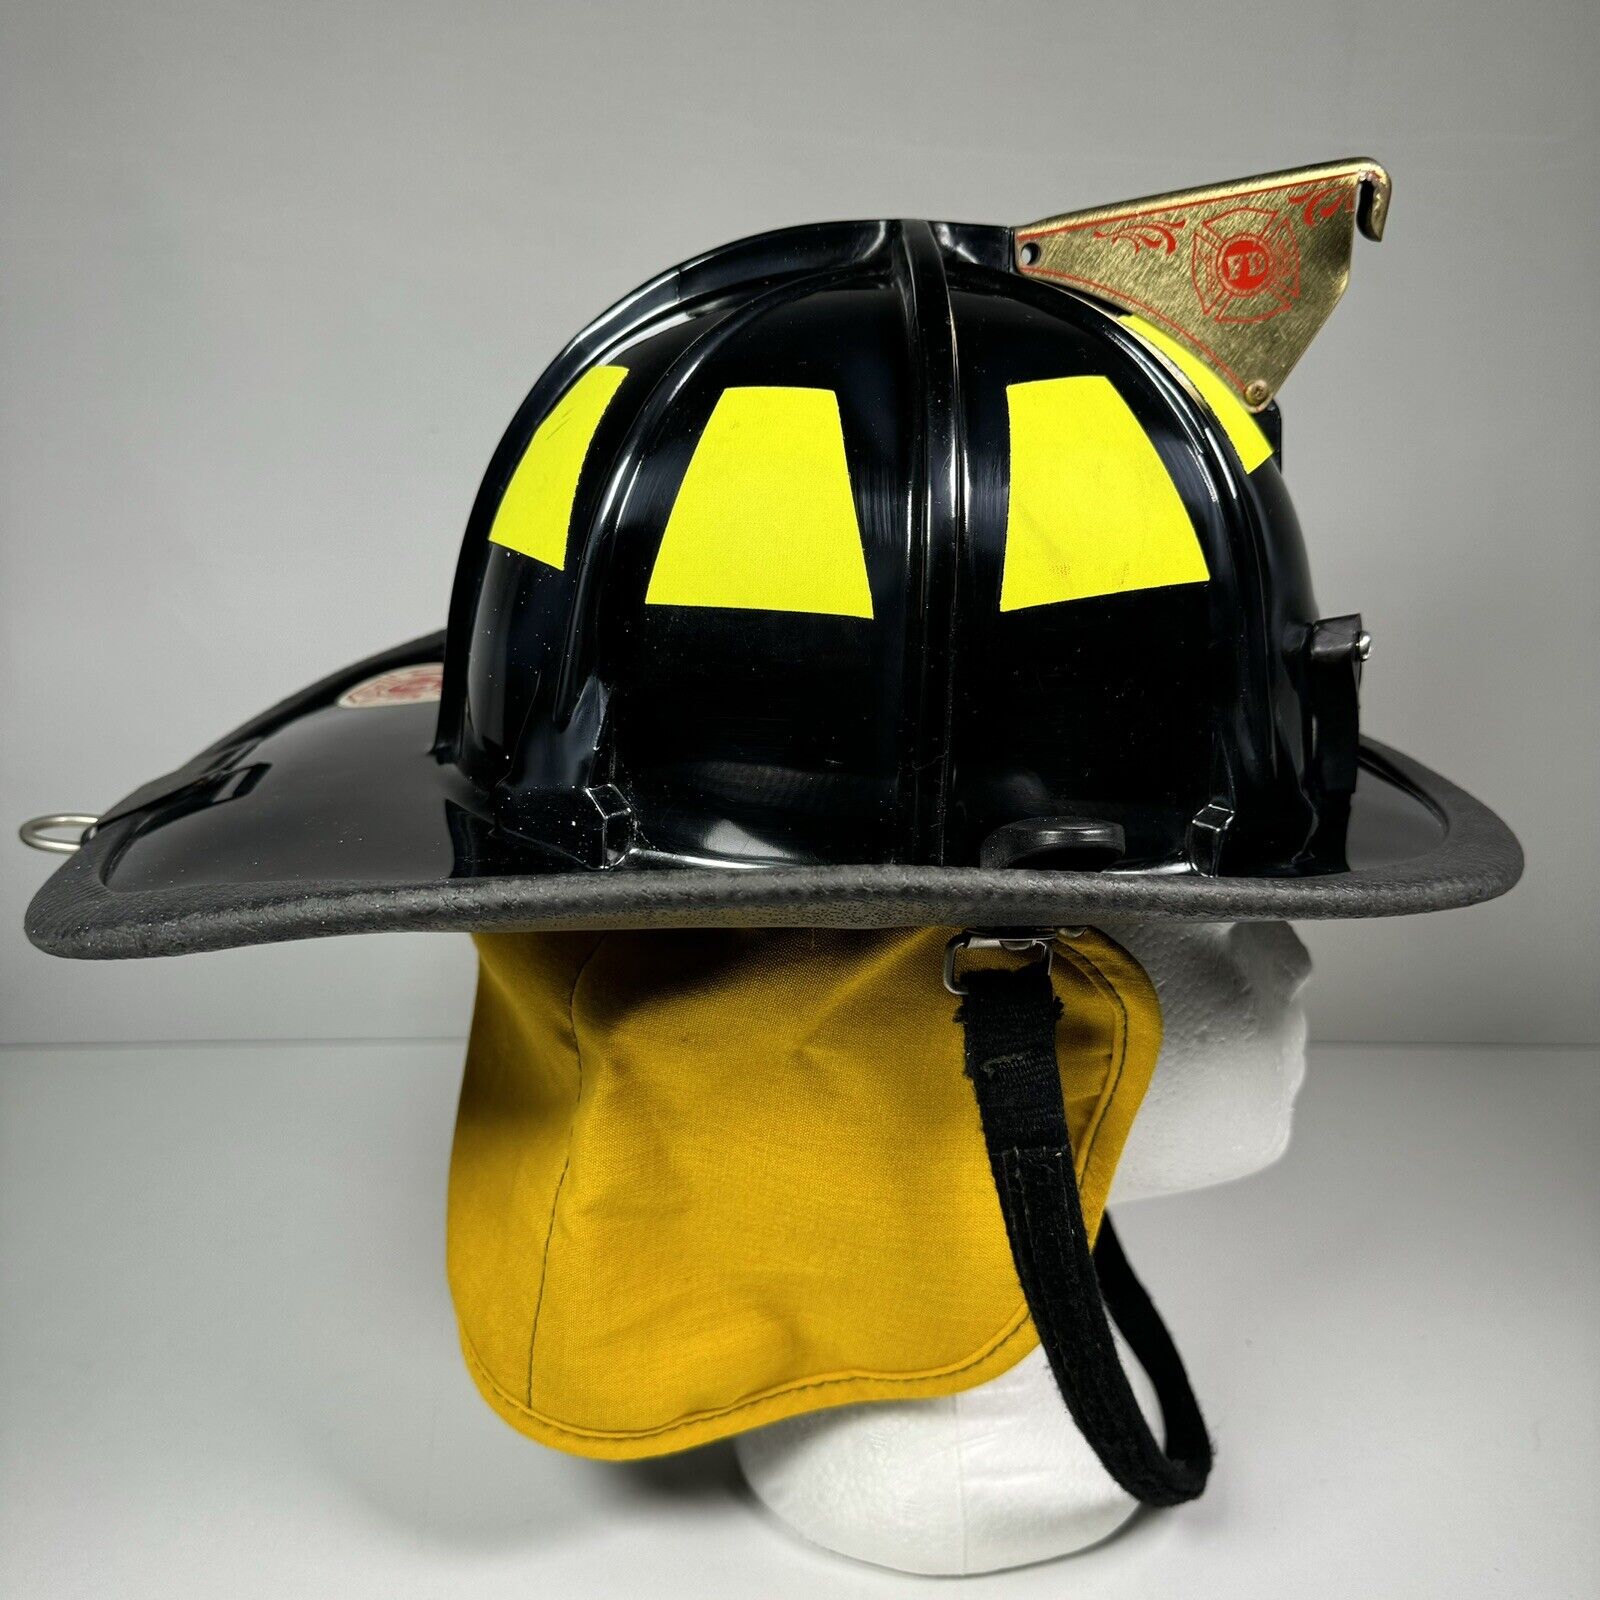 Cairns 880 Fire Helmet C-TRD Black 2005 W/ Neck Protector